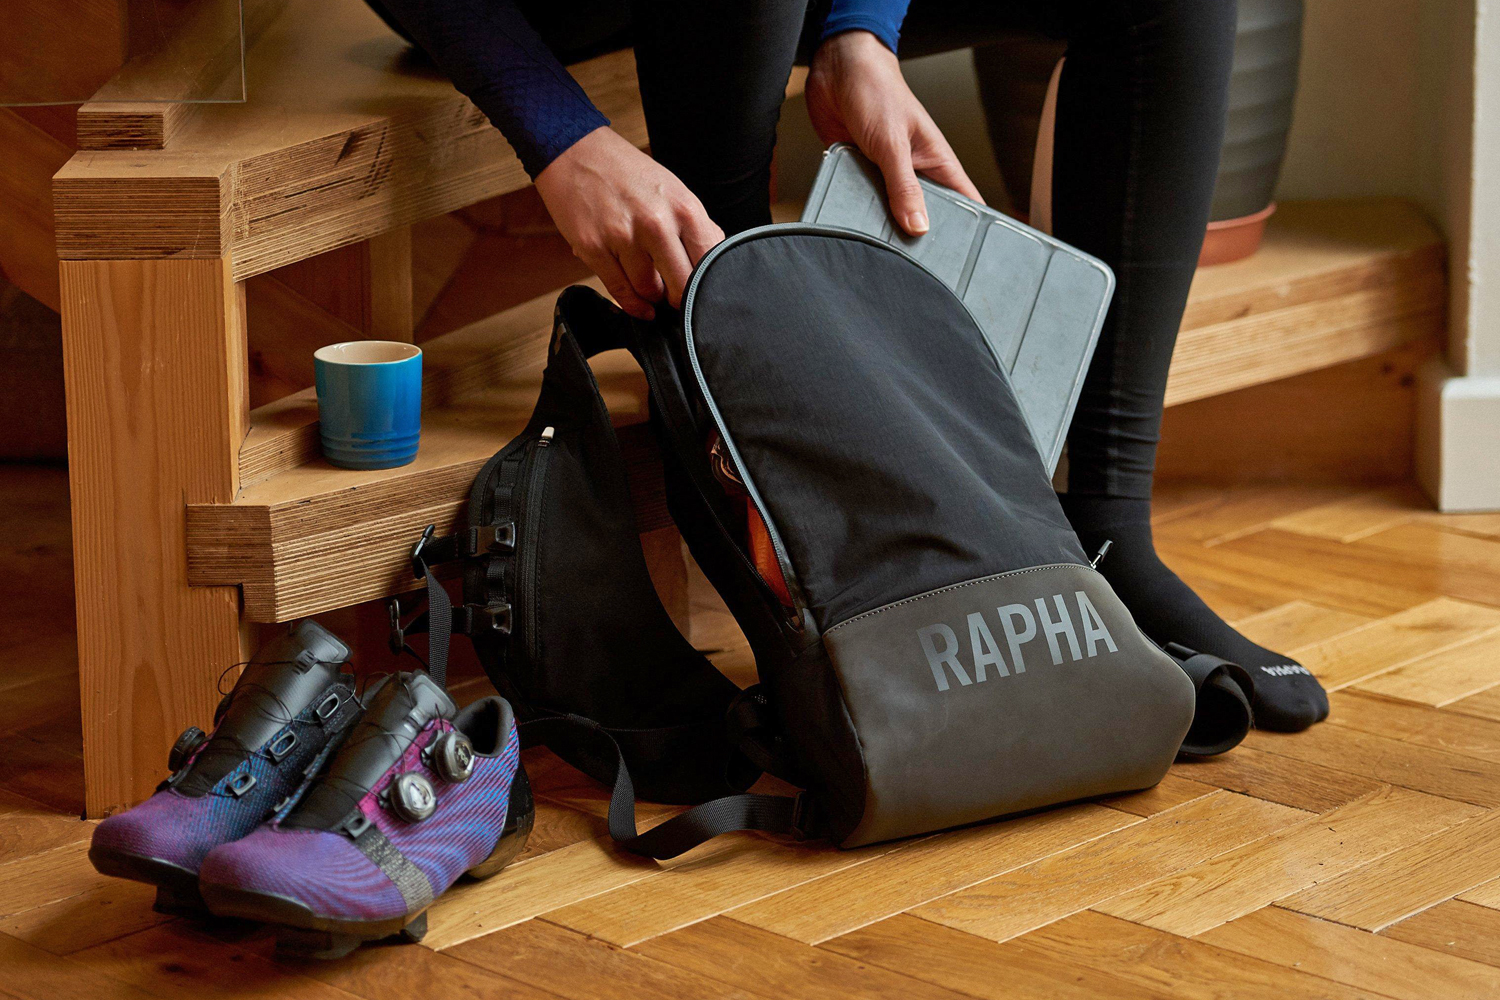 Rapha Pro Team Lightweight Backpack, fast training Pro Team-level roadie road bike commuter bag